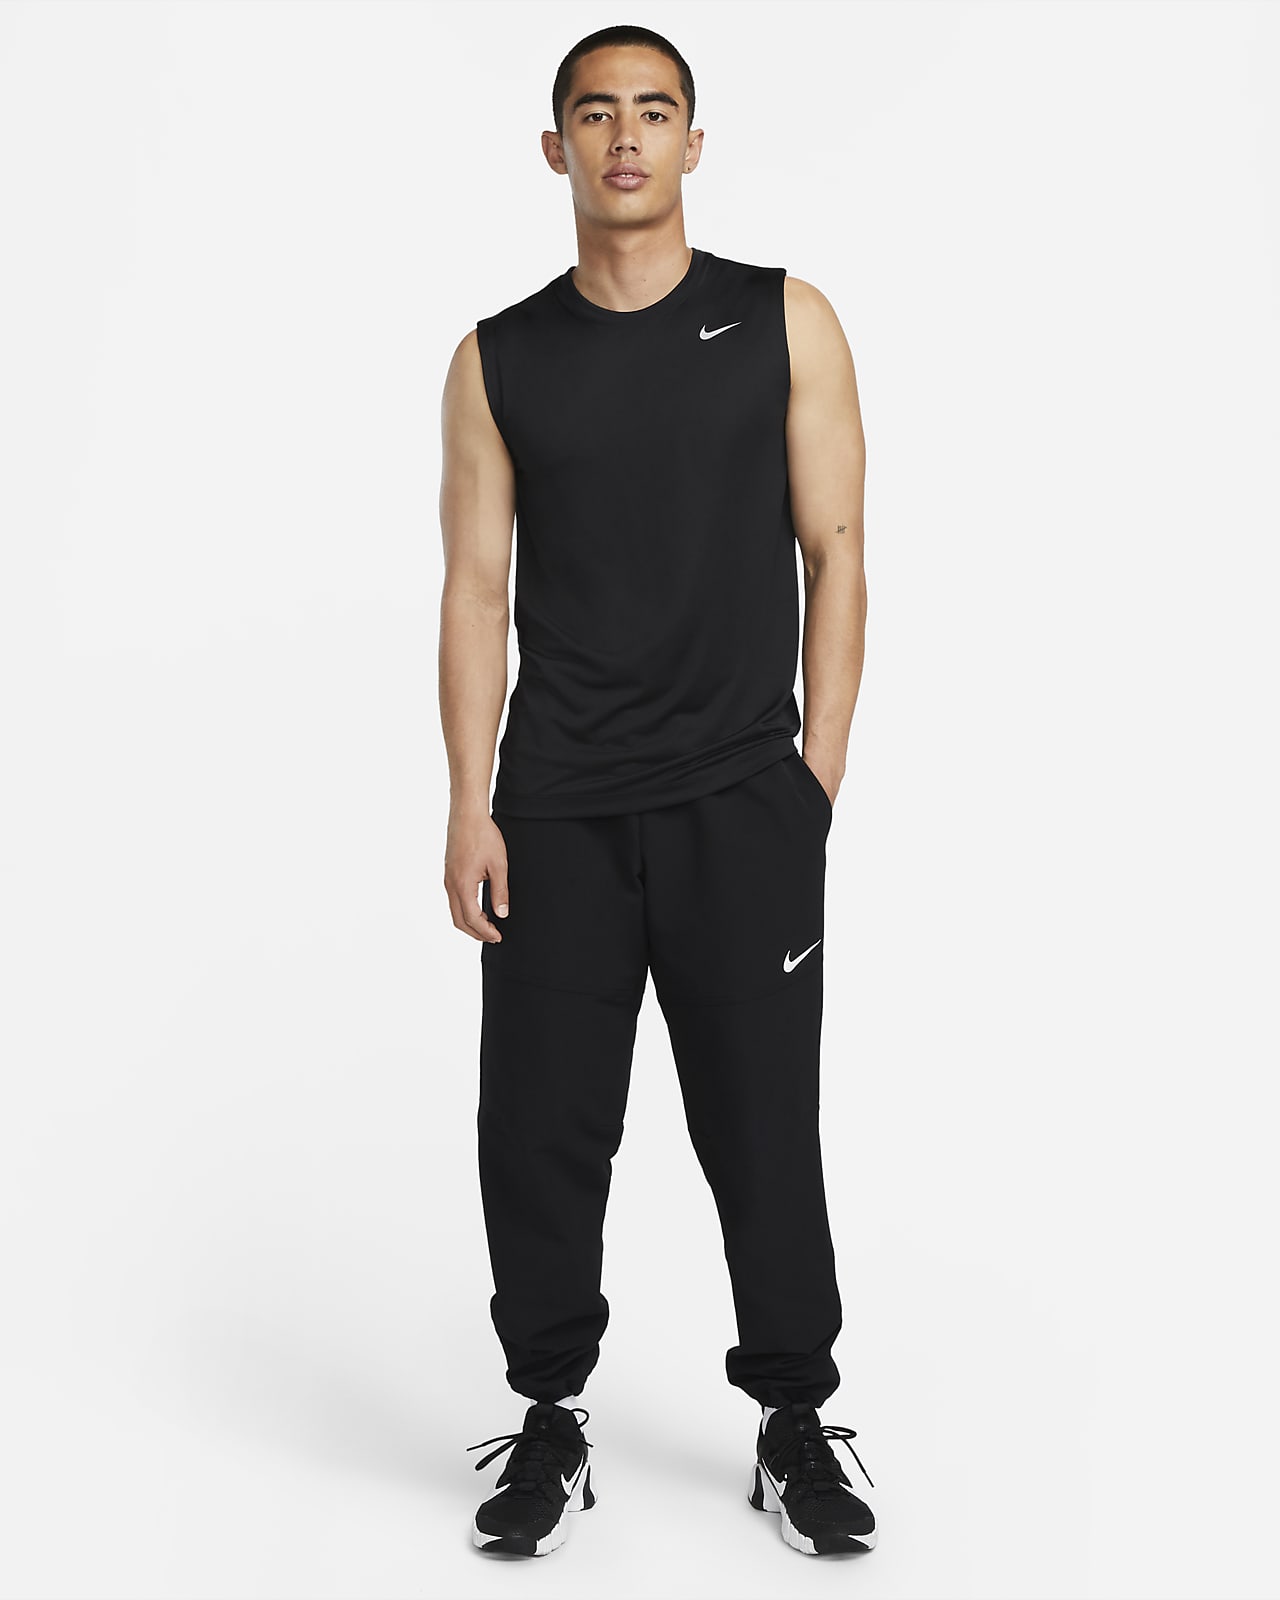 Men's Nike Pro Grey training tank top